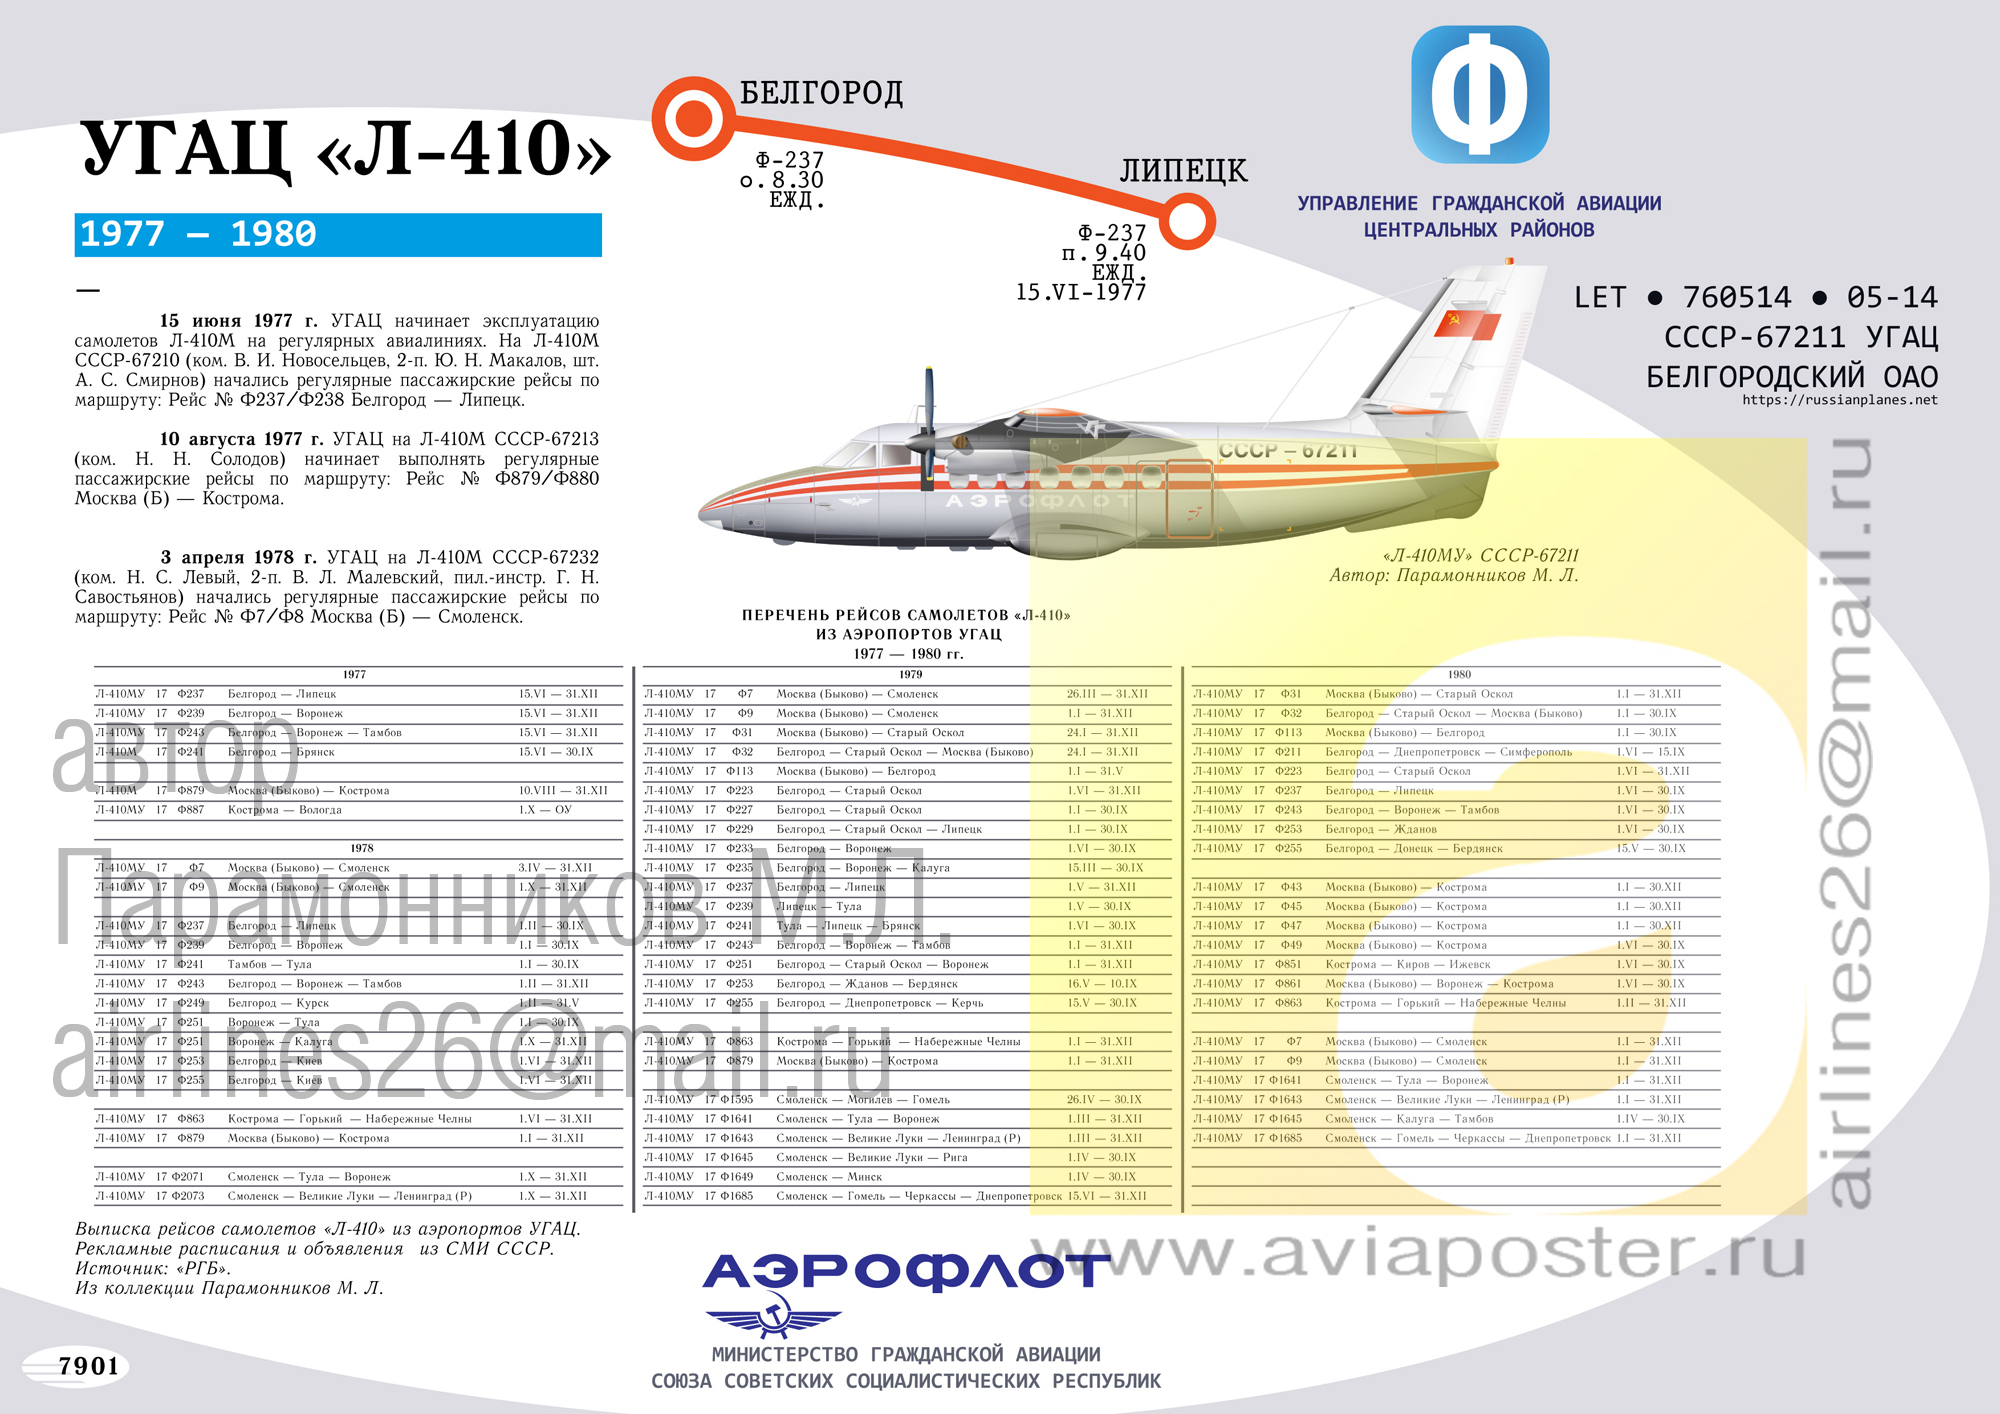 Ярославль аэропорт расписание. Расход топлива самолёта л-410.